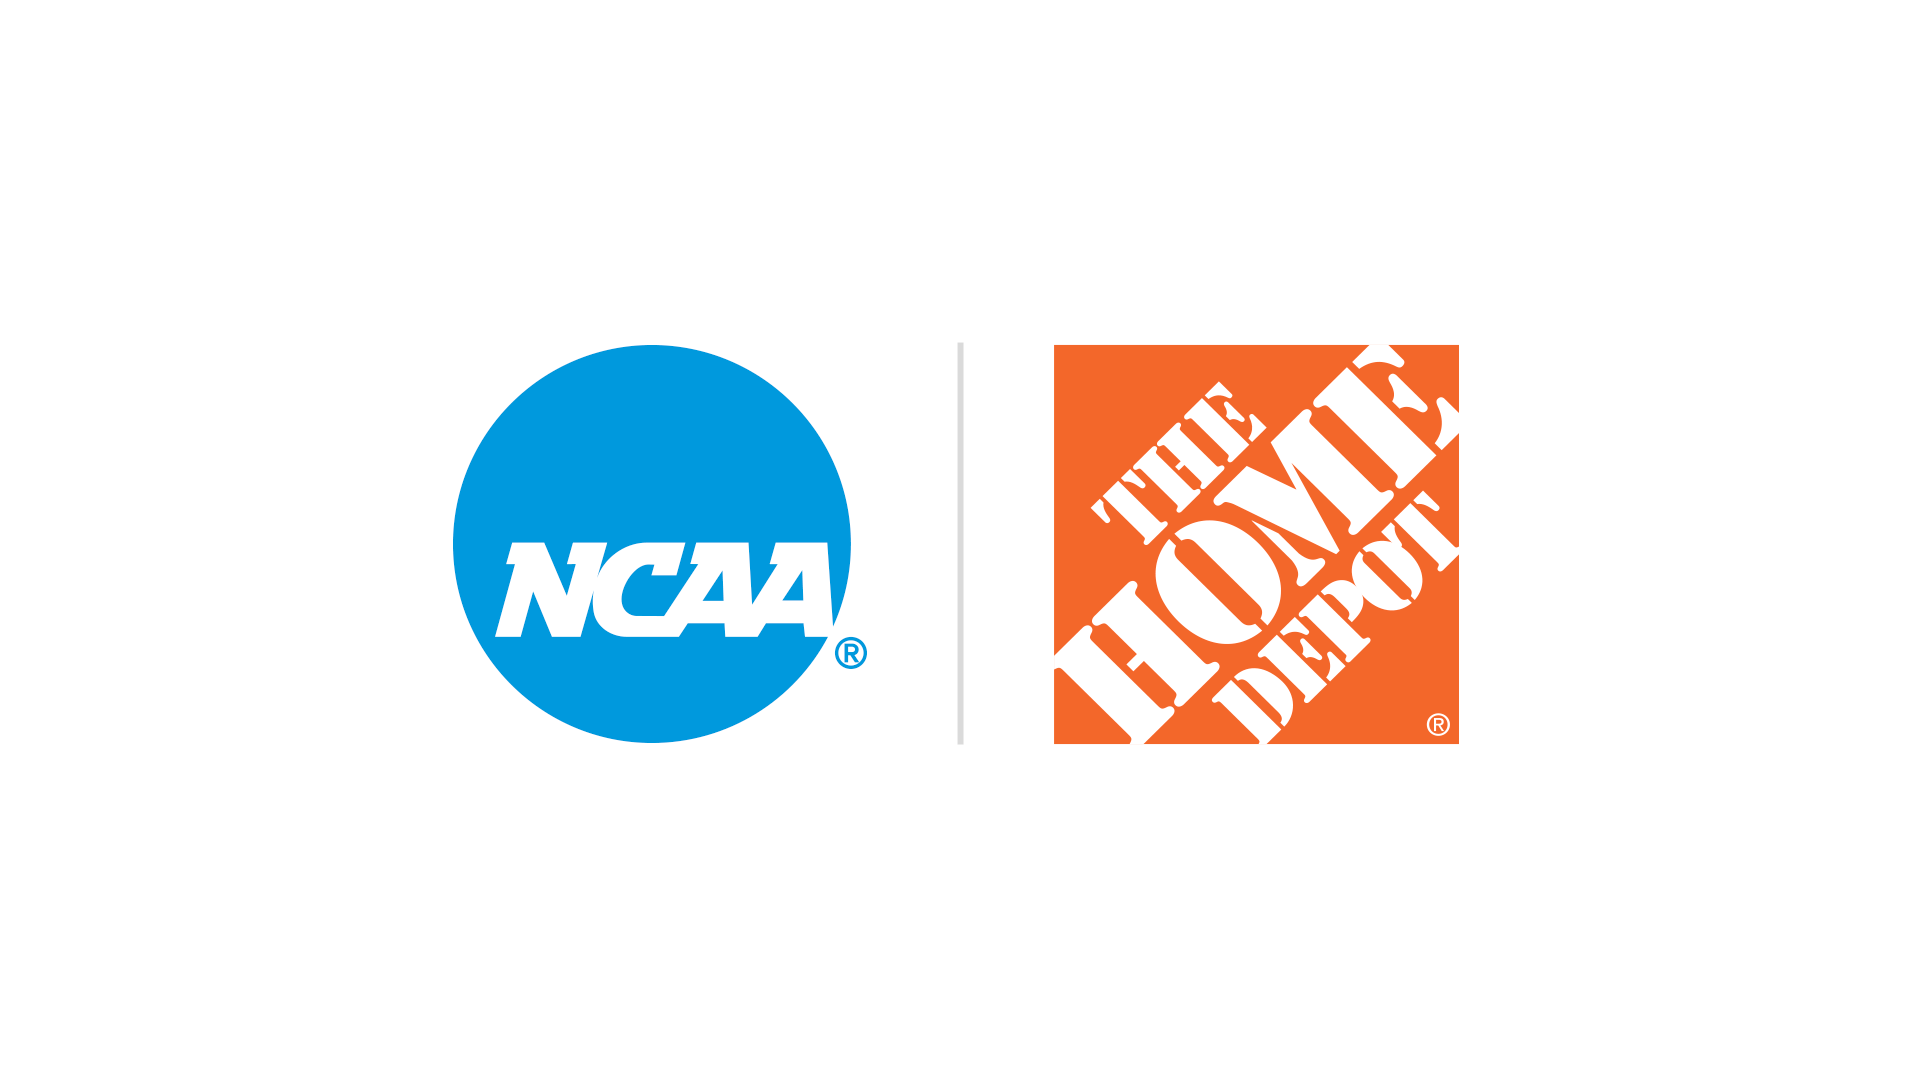 NCAA and Home Depot logos